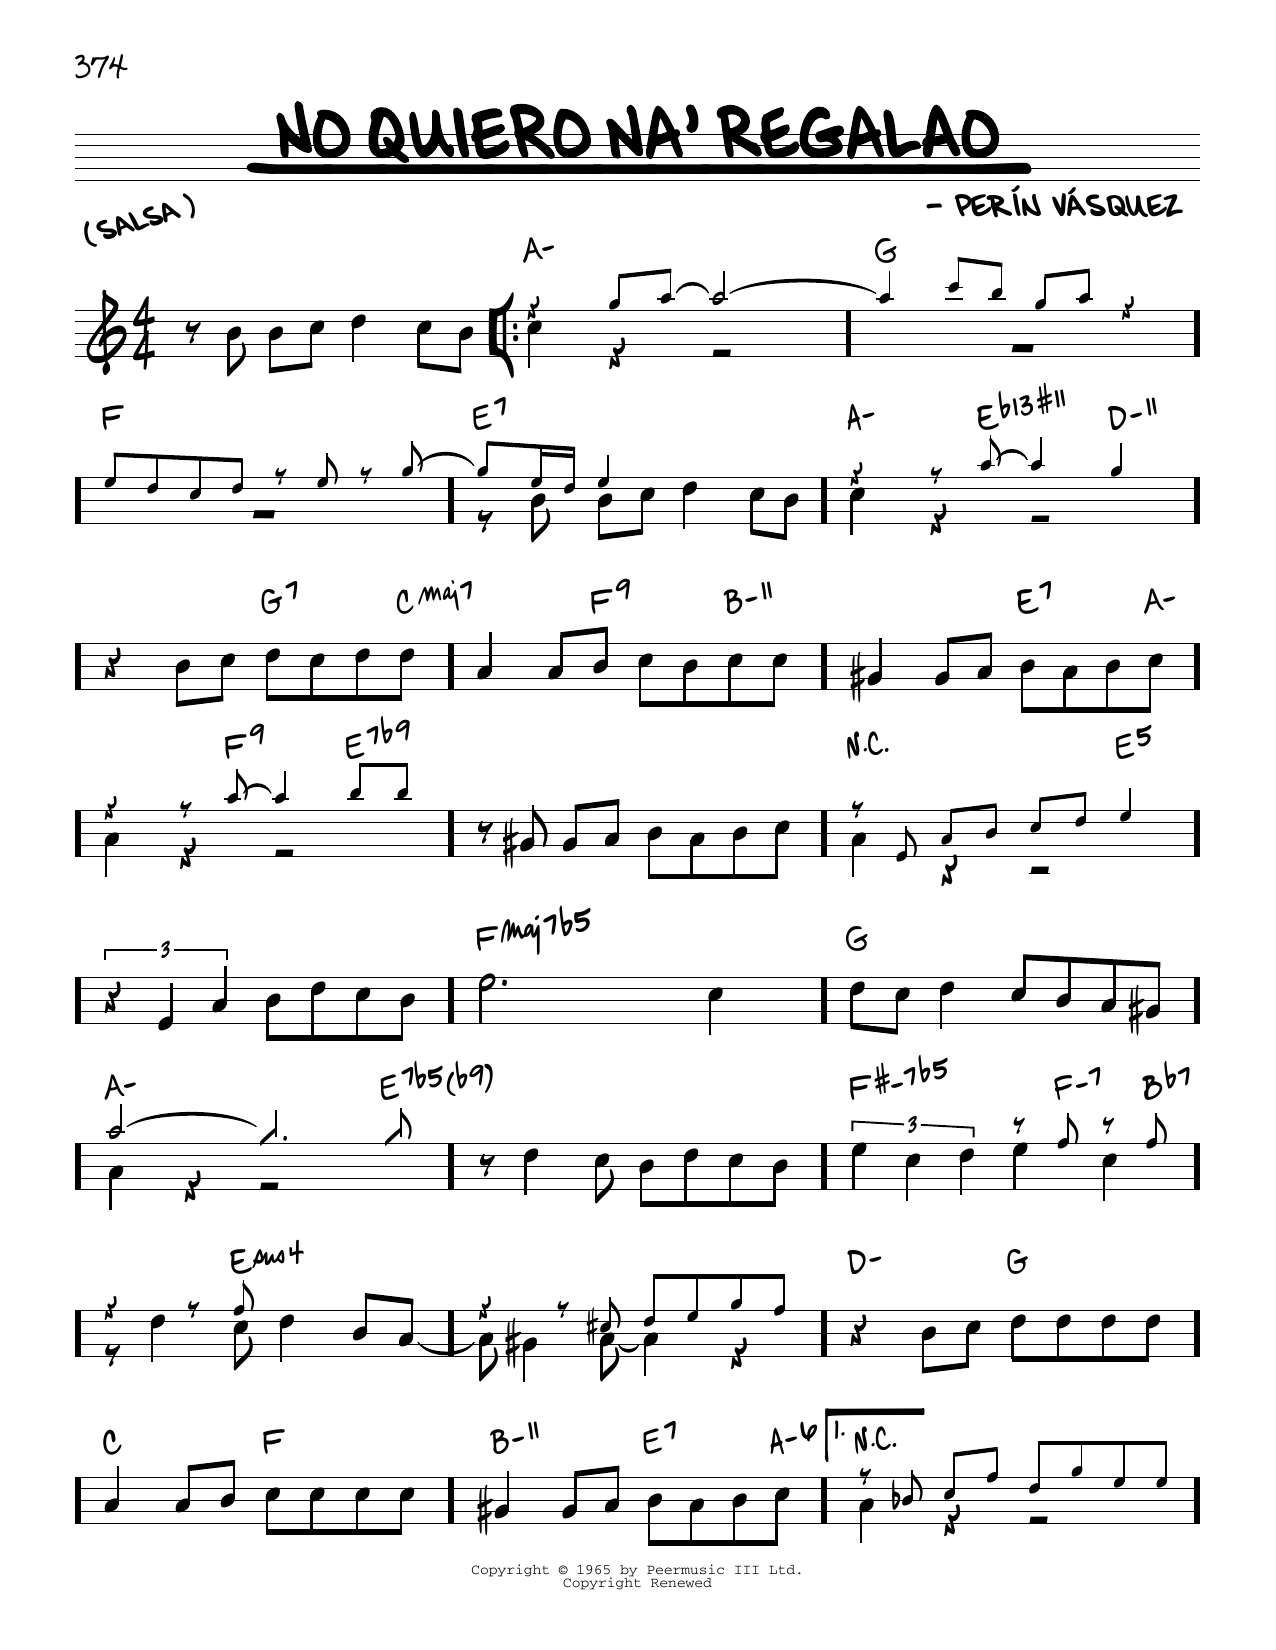 Perin Vasquez No Quiero Na' Regalao Sheet Music Notes & Chords for Real Book – Melody & Chords - Download or Print PDF